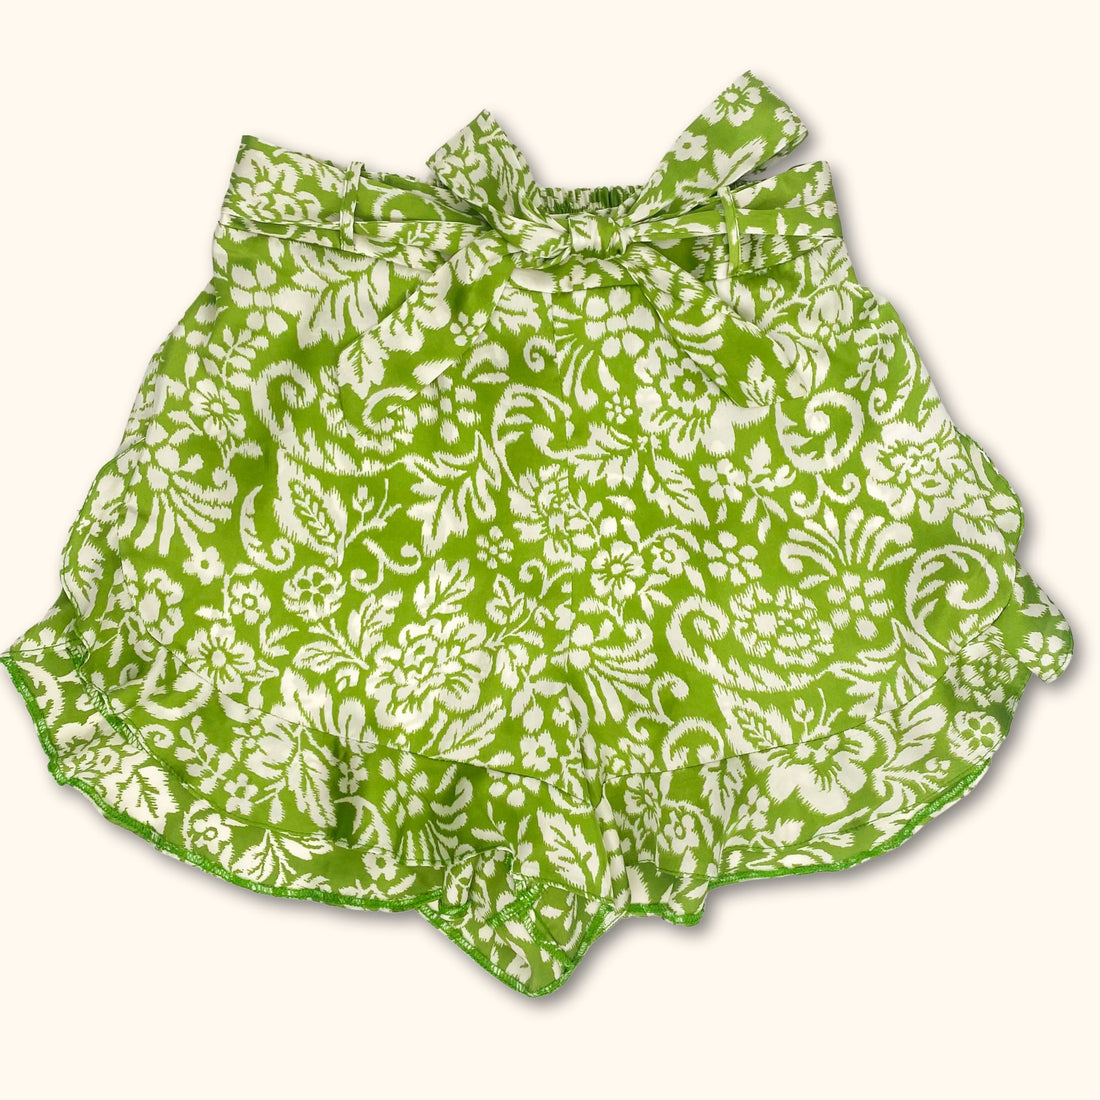 River Island Green Floral High Waist Flowy Shorts - Size 8 - River Island - Shorts